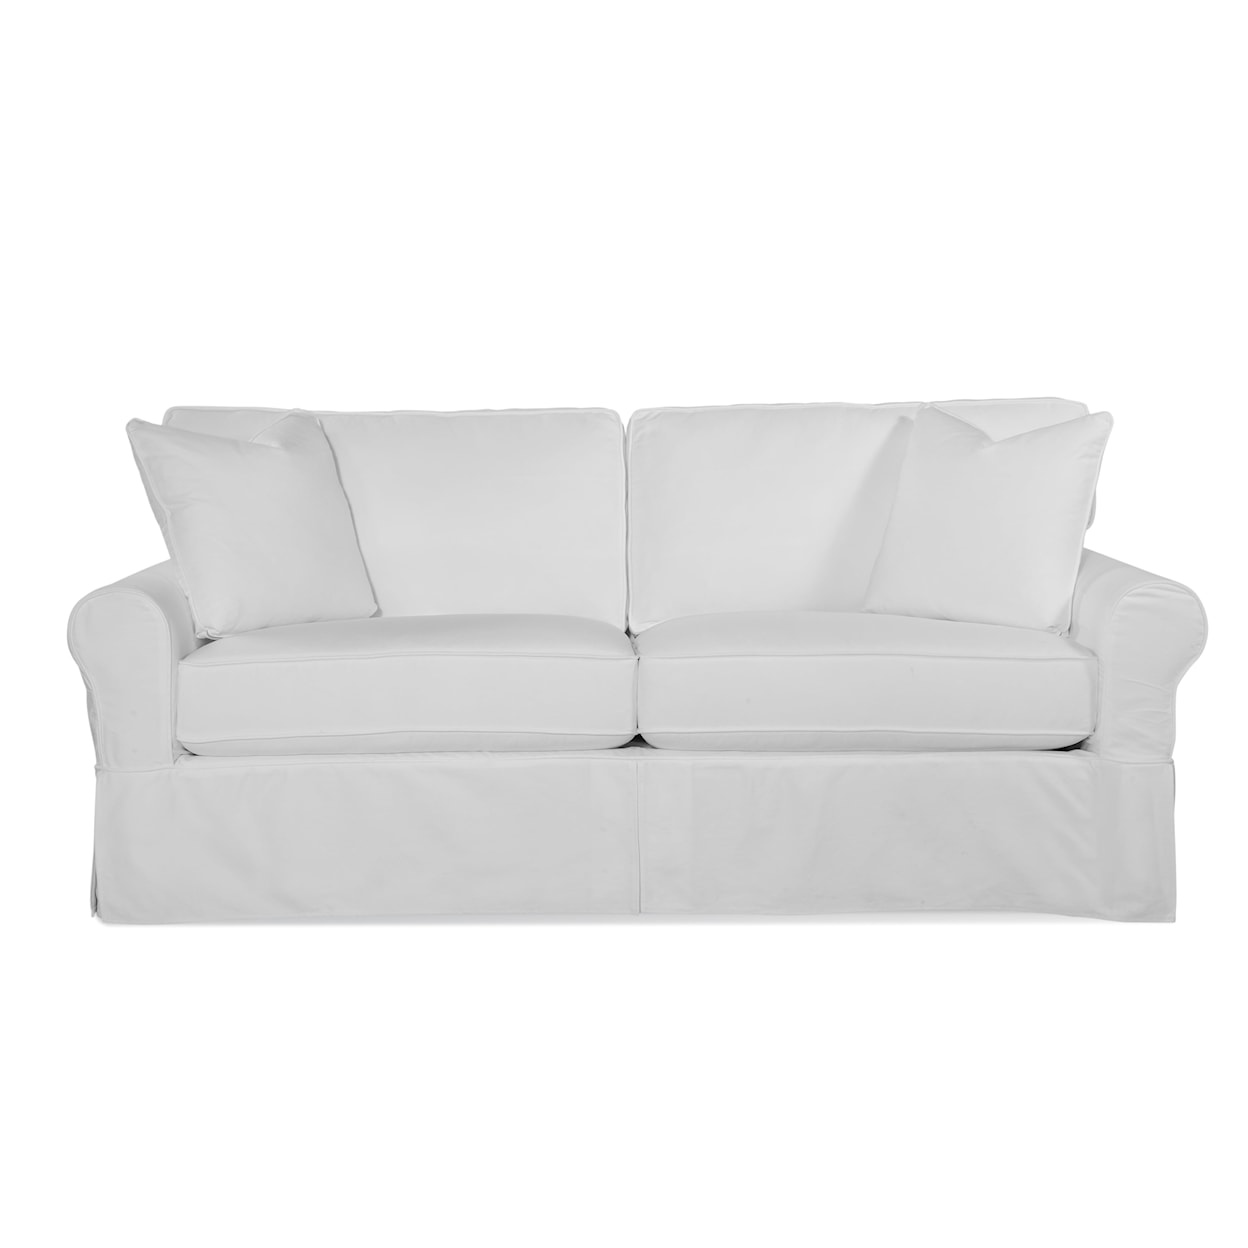 Braxton Culler Bedford Bedford Full Sleeper Sofa with Slipcover